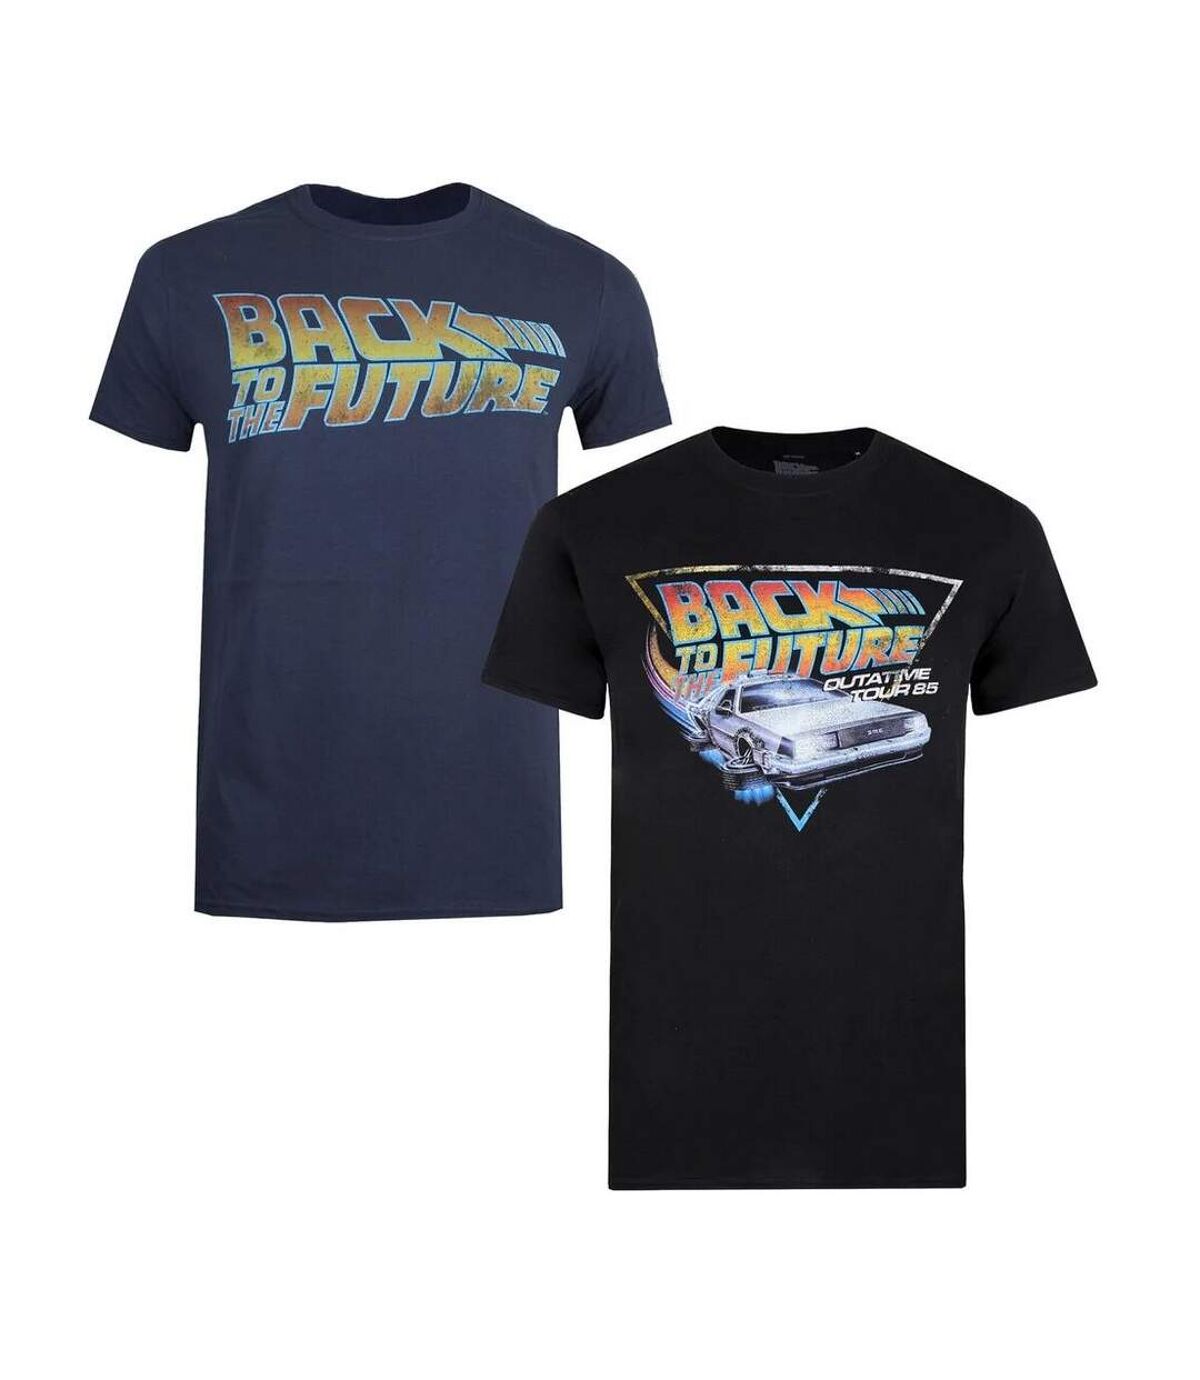 Back To The Future - T-shirts - Homme (Noir / Bleu marine) - UTTV796